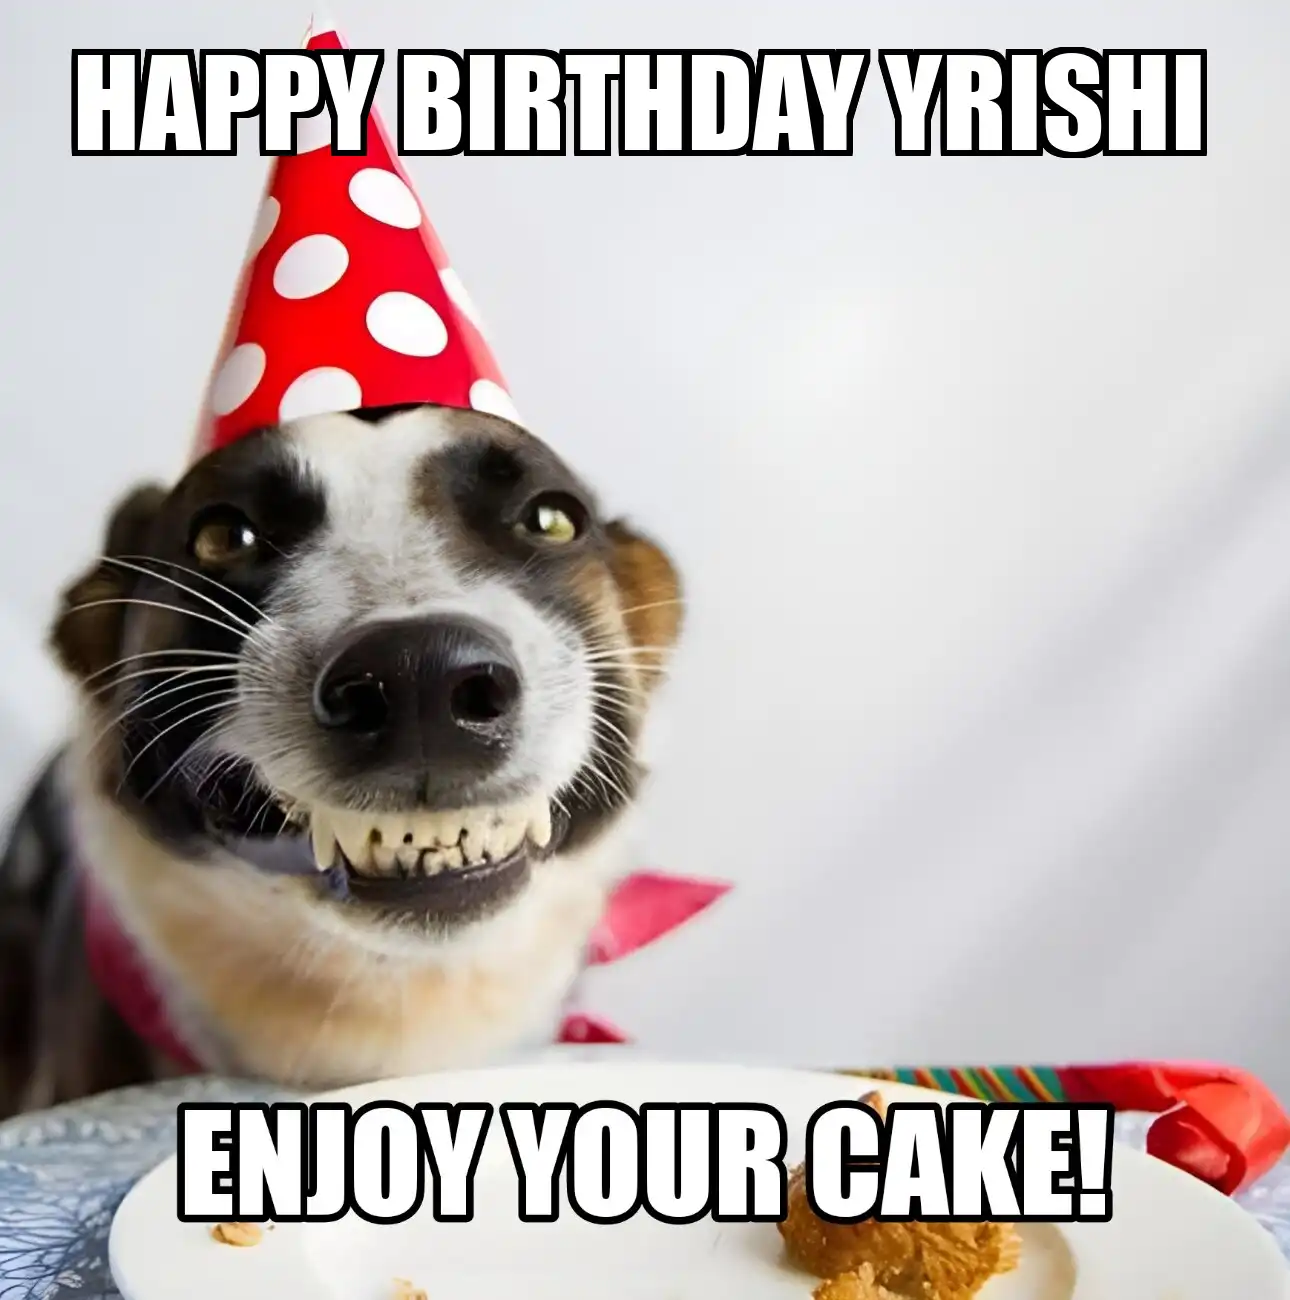 Happy Birthday Yrishi Enjoy Your Cake Dog Meme